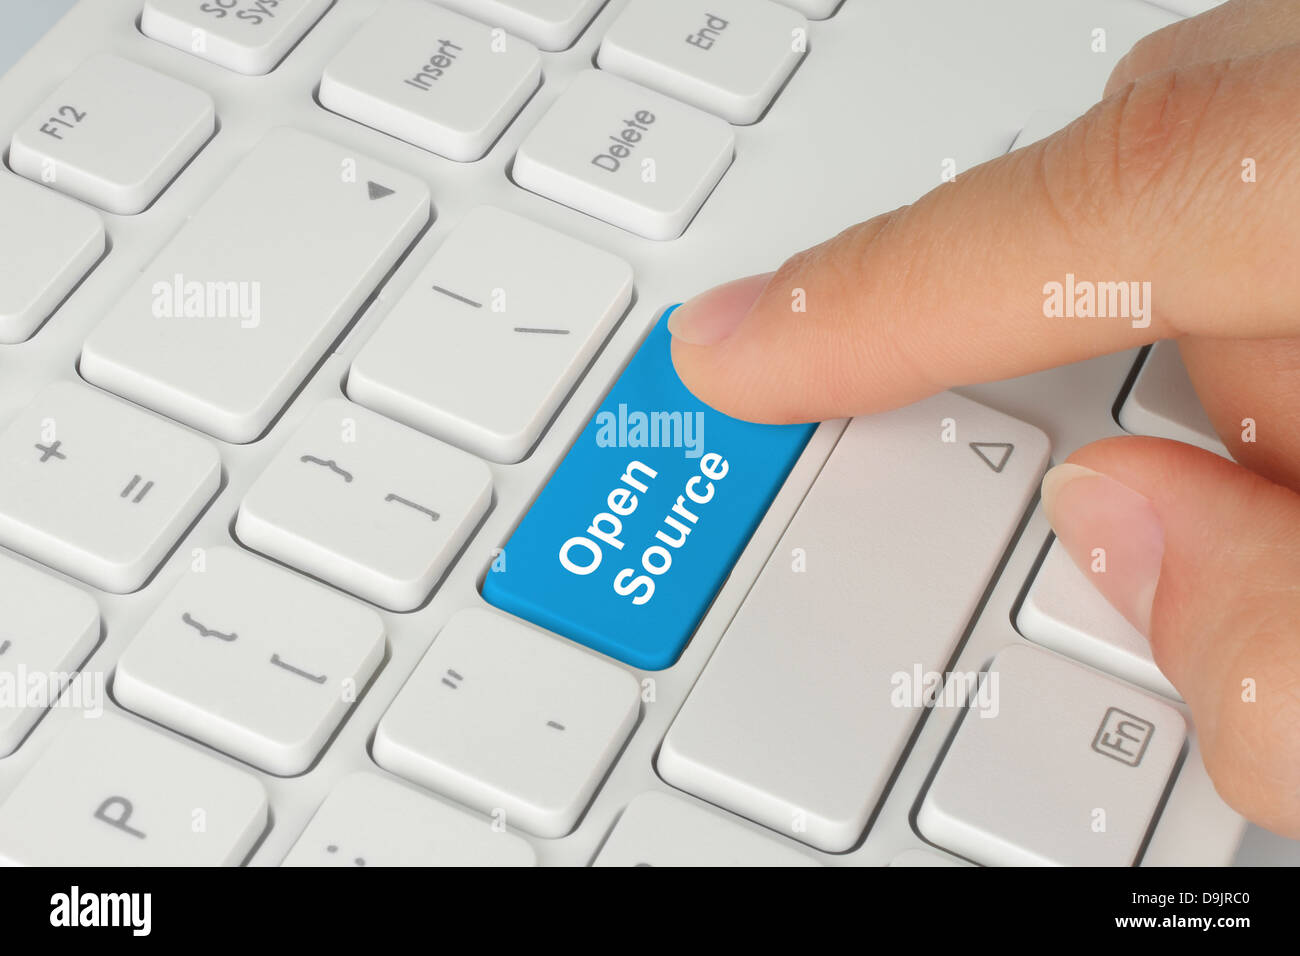 Hand pushing blue open source keyboard button Stock Photo